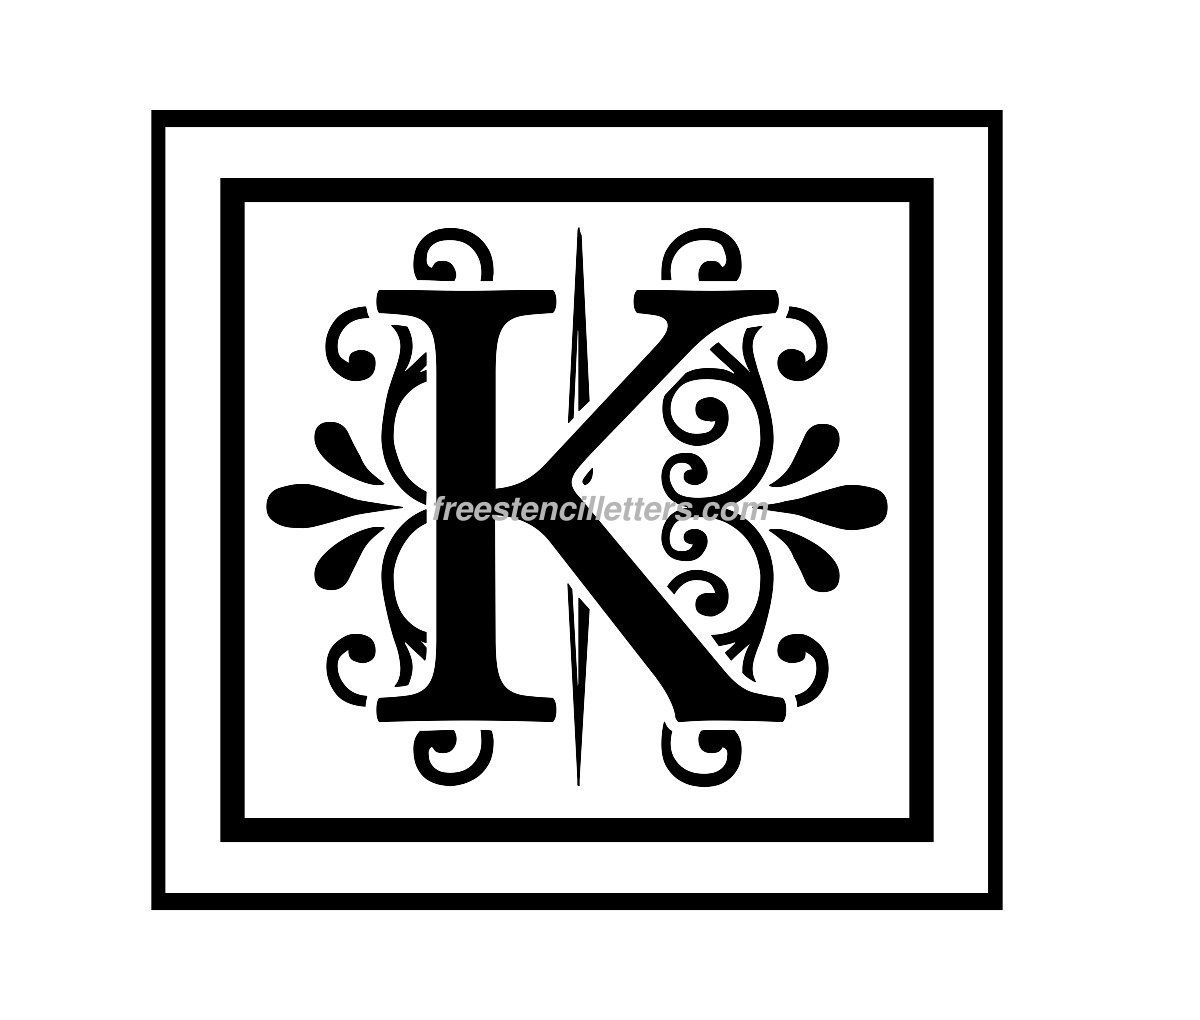 Print K Letter Stencil